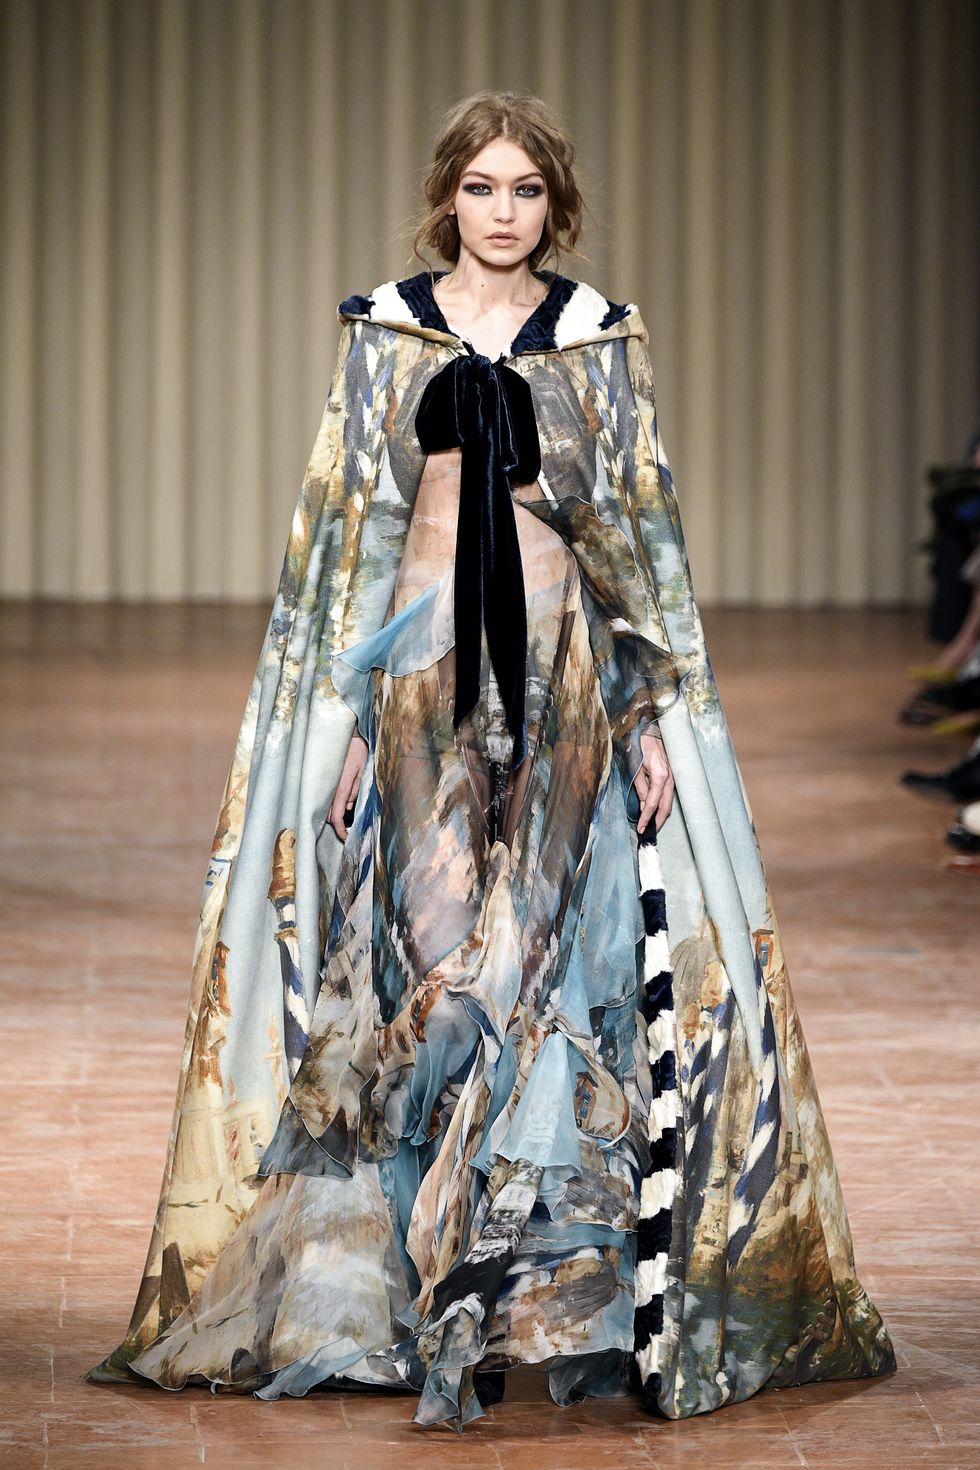 Gigi Hadid walking for Alberta Feretti at Milan Fashion Week